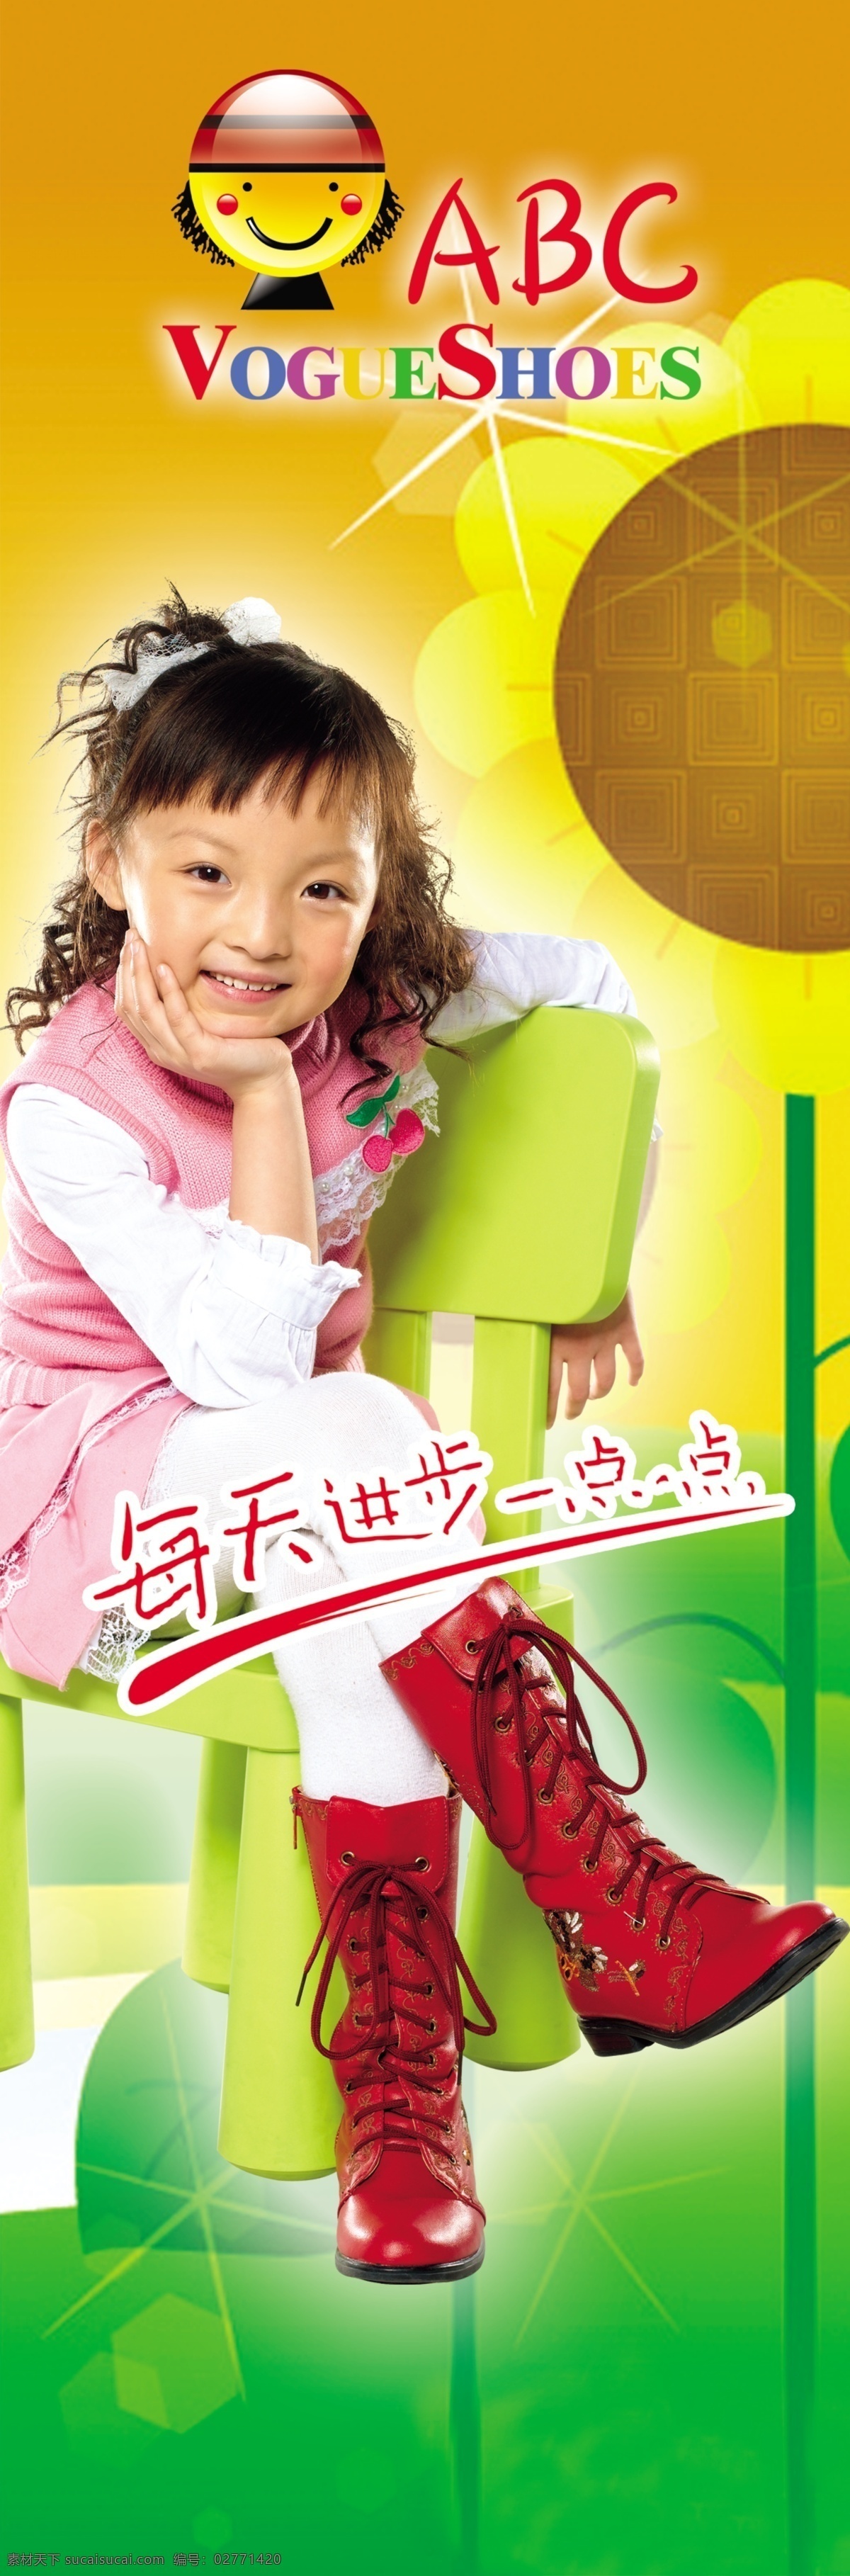 abc 凳子 广告设计模板 绿色背景 童装 向日葵 小女孩 海报 模板下载 孔莹 源文件 海报背景图